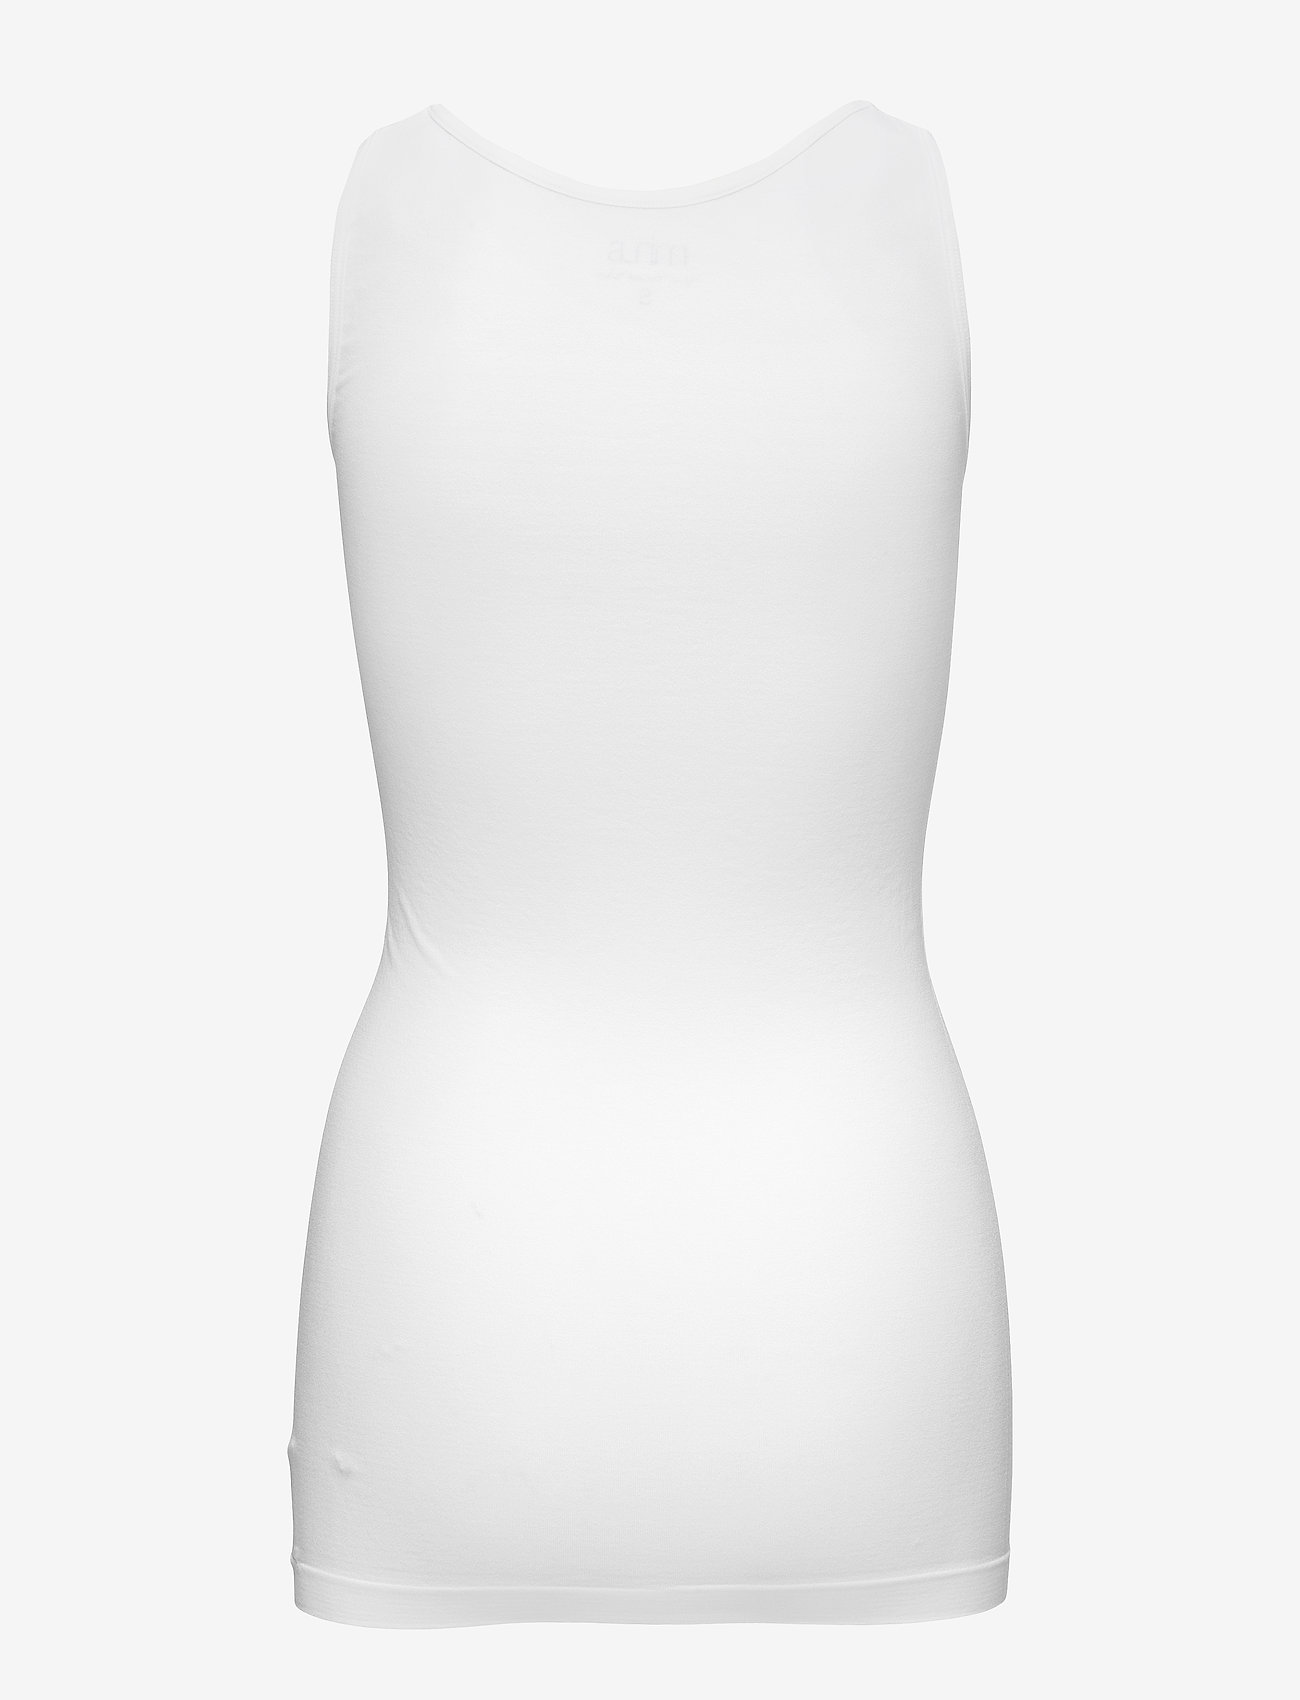 Minus - CLARICE top - sleeveless tops - white - 1